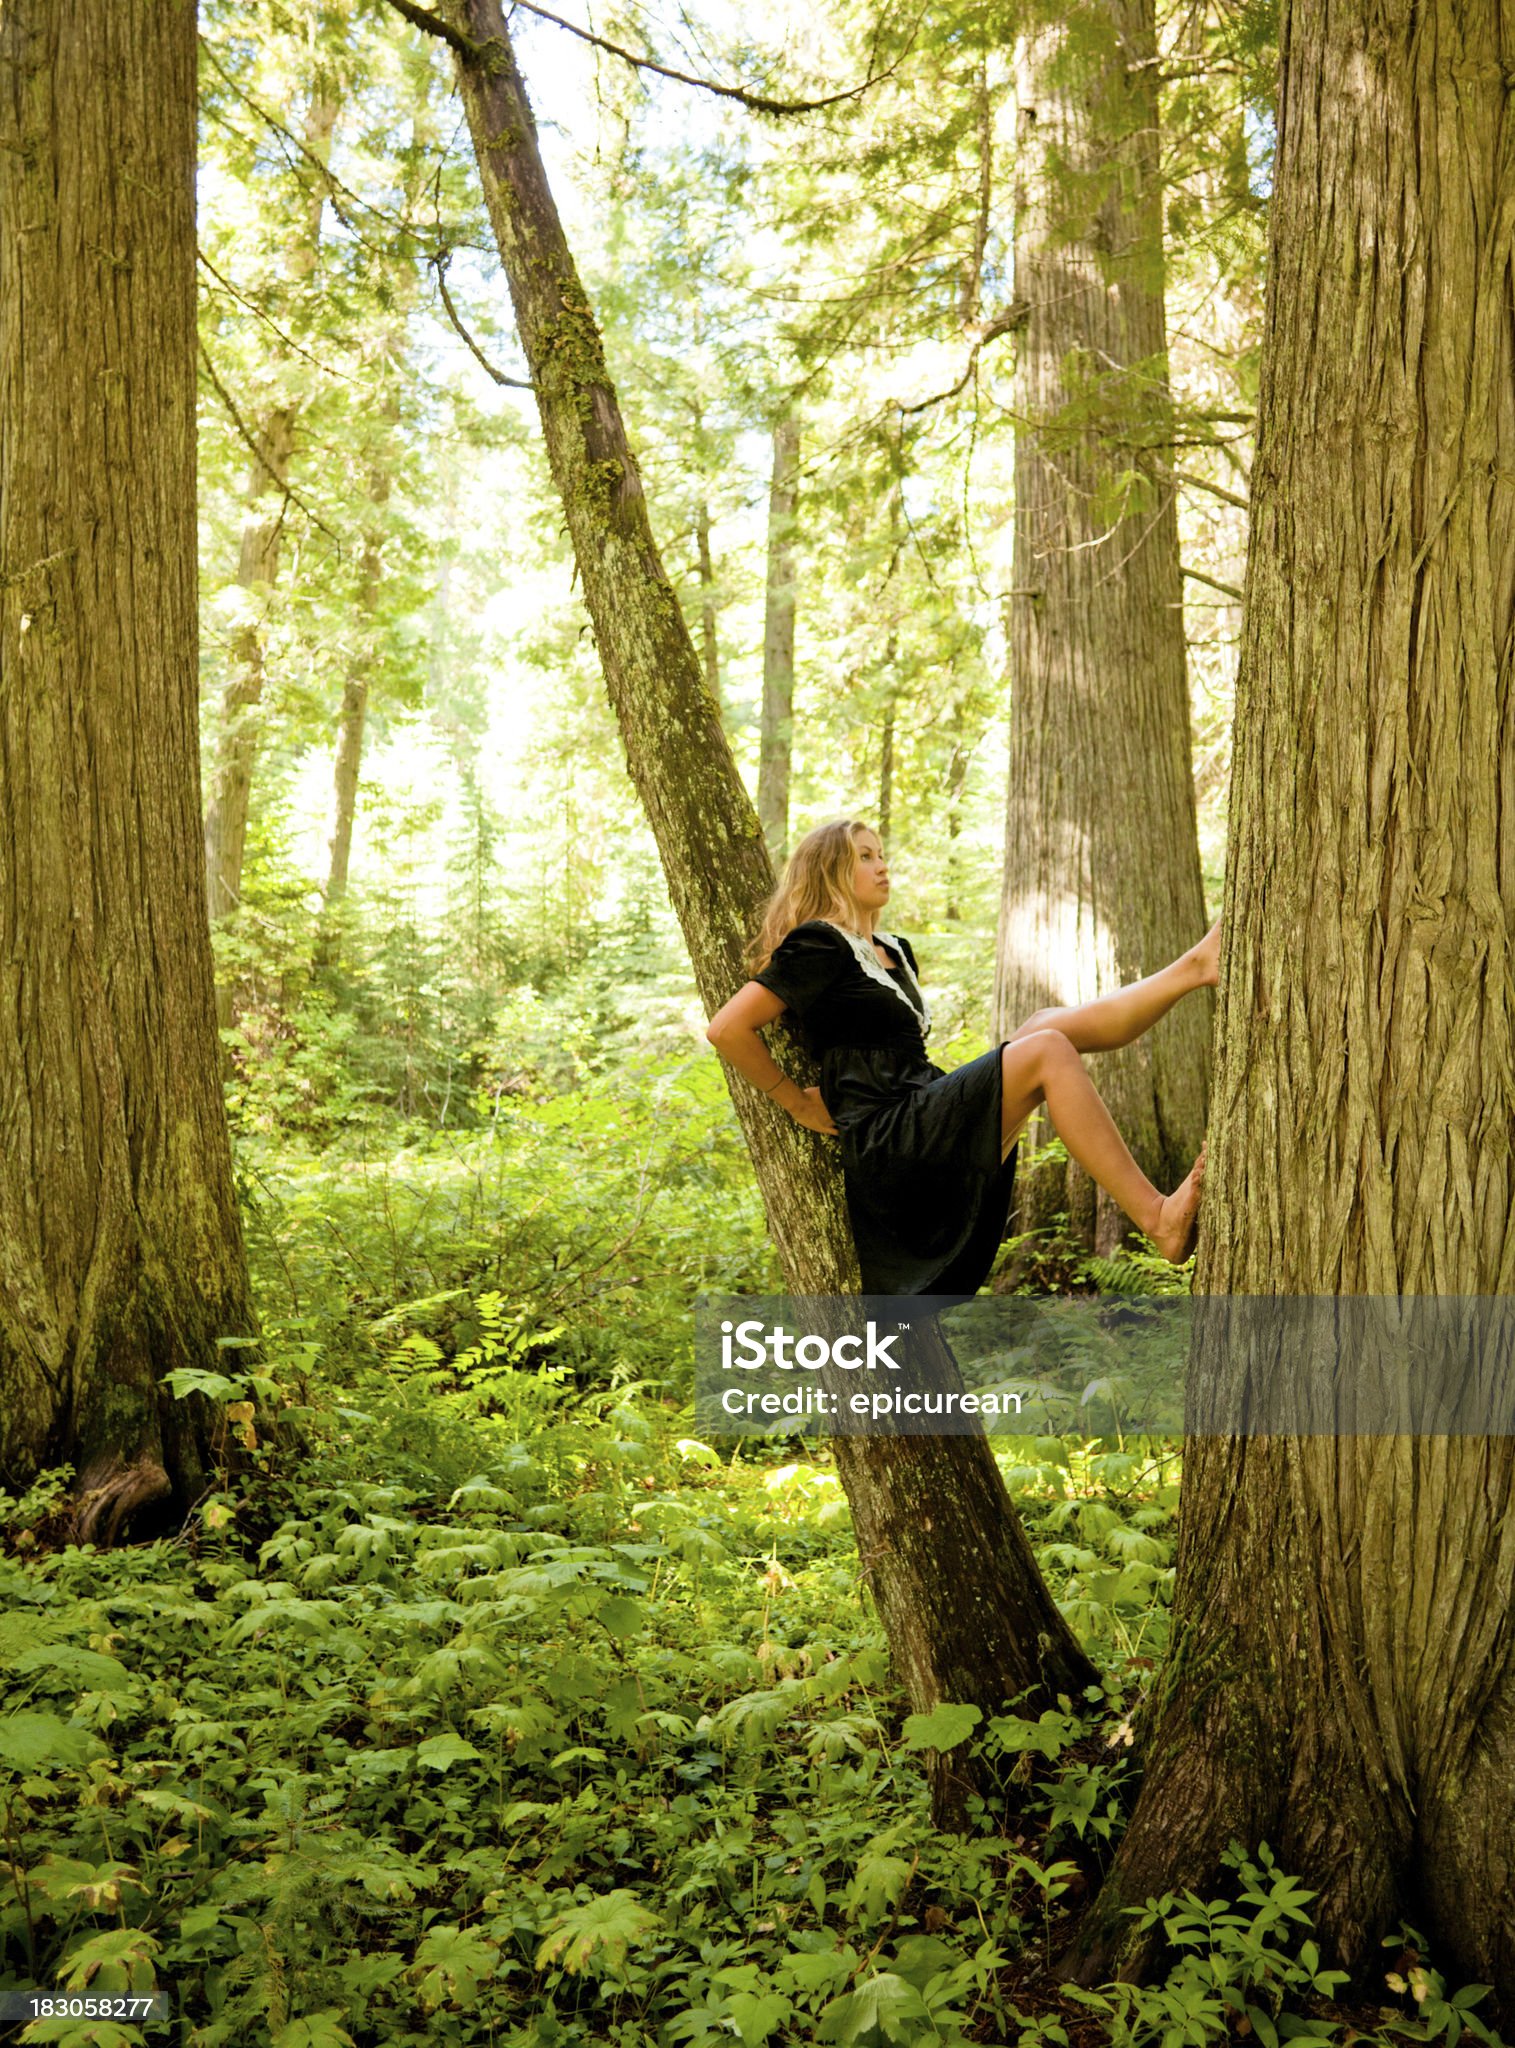 https://media.istockphoto.com/id/183058277/photo/beautiful-young-woman-stretching-in-a-tree.jpg?s=2048x2048&amp;w=is&amp;k=20&amp;c=tJKmtg6Ii1EotkOH6lrRIRgevz_im84_8aImlduikvY=